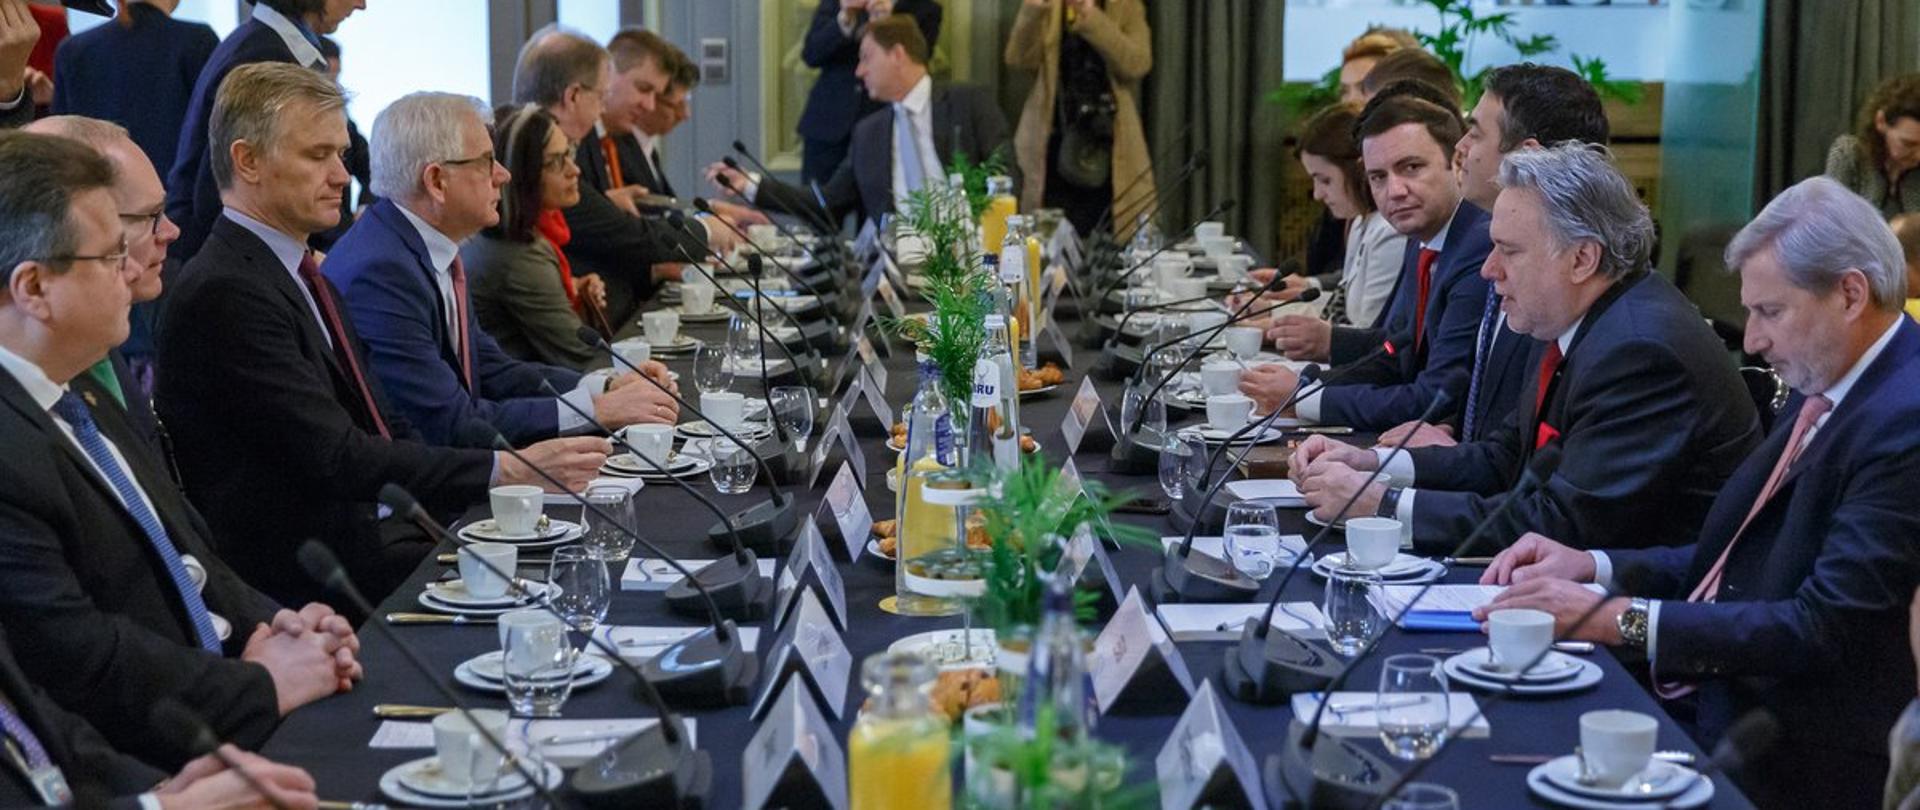 Minister Jacek Czaputowicz attends Foreign Affairs Council